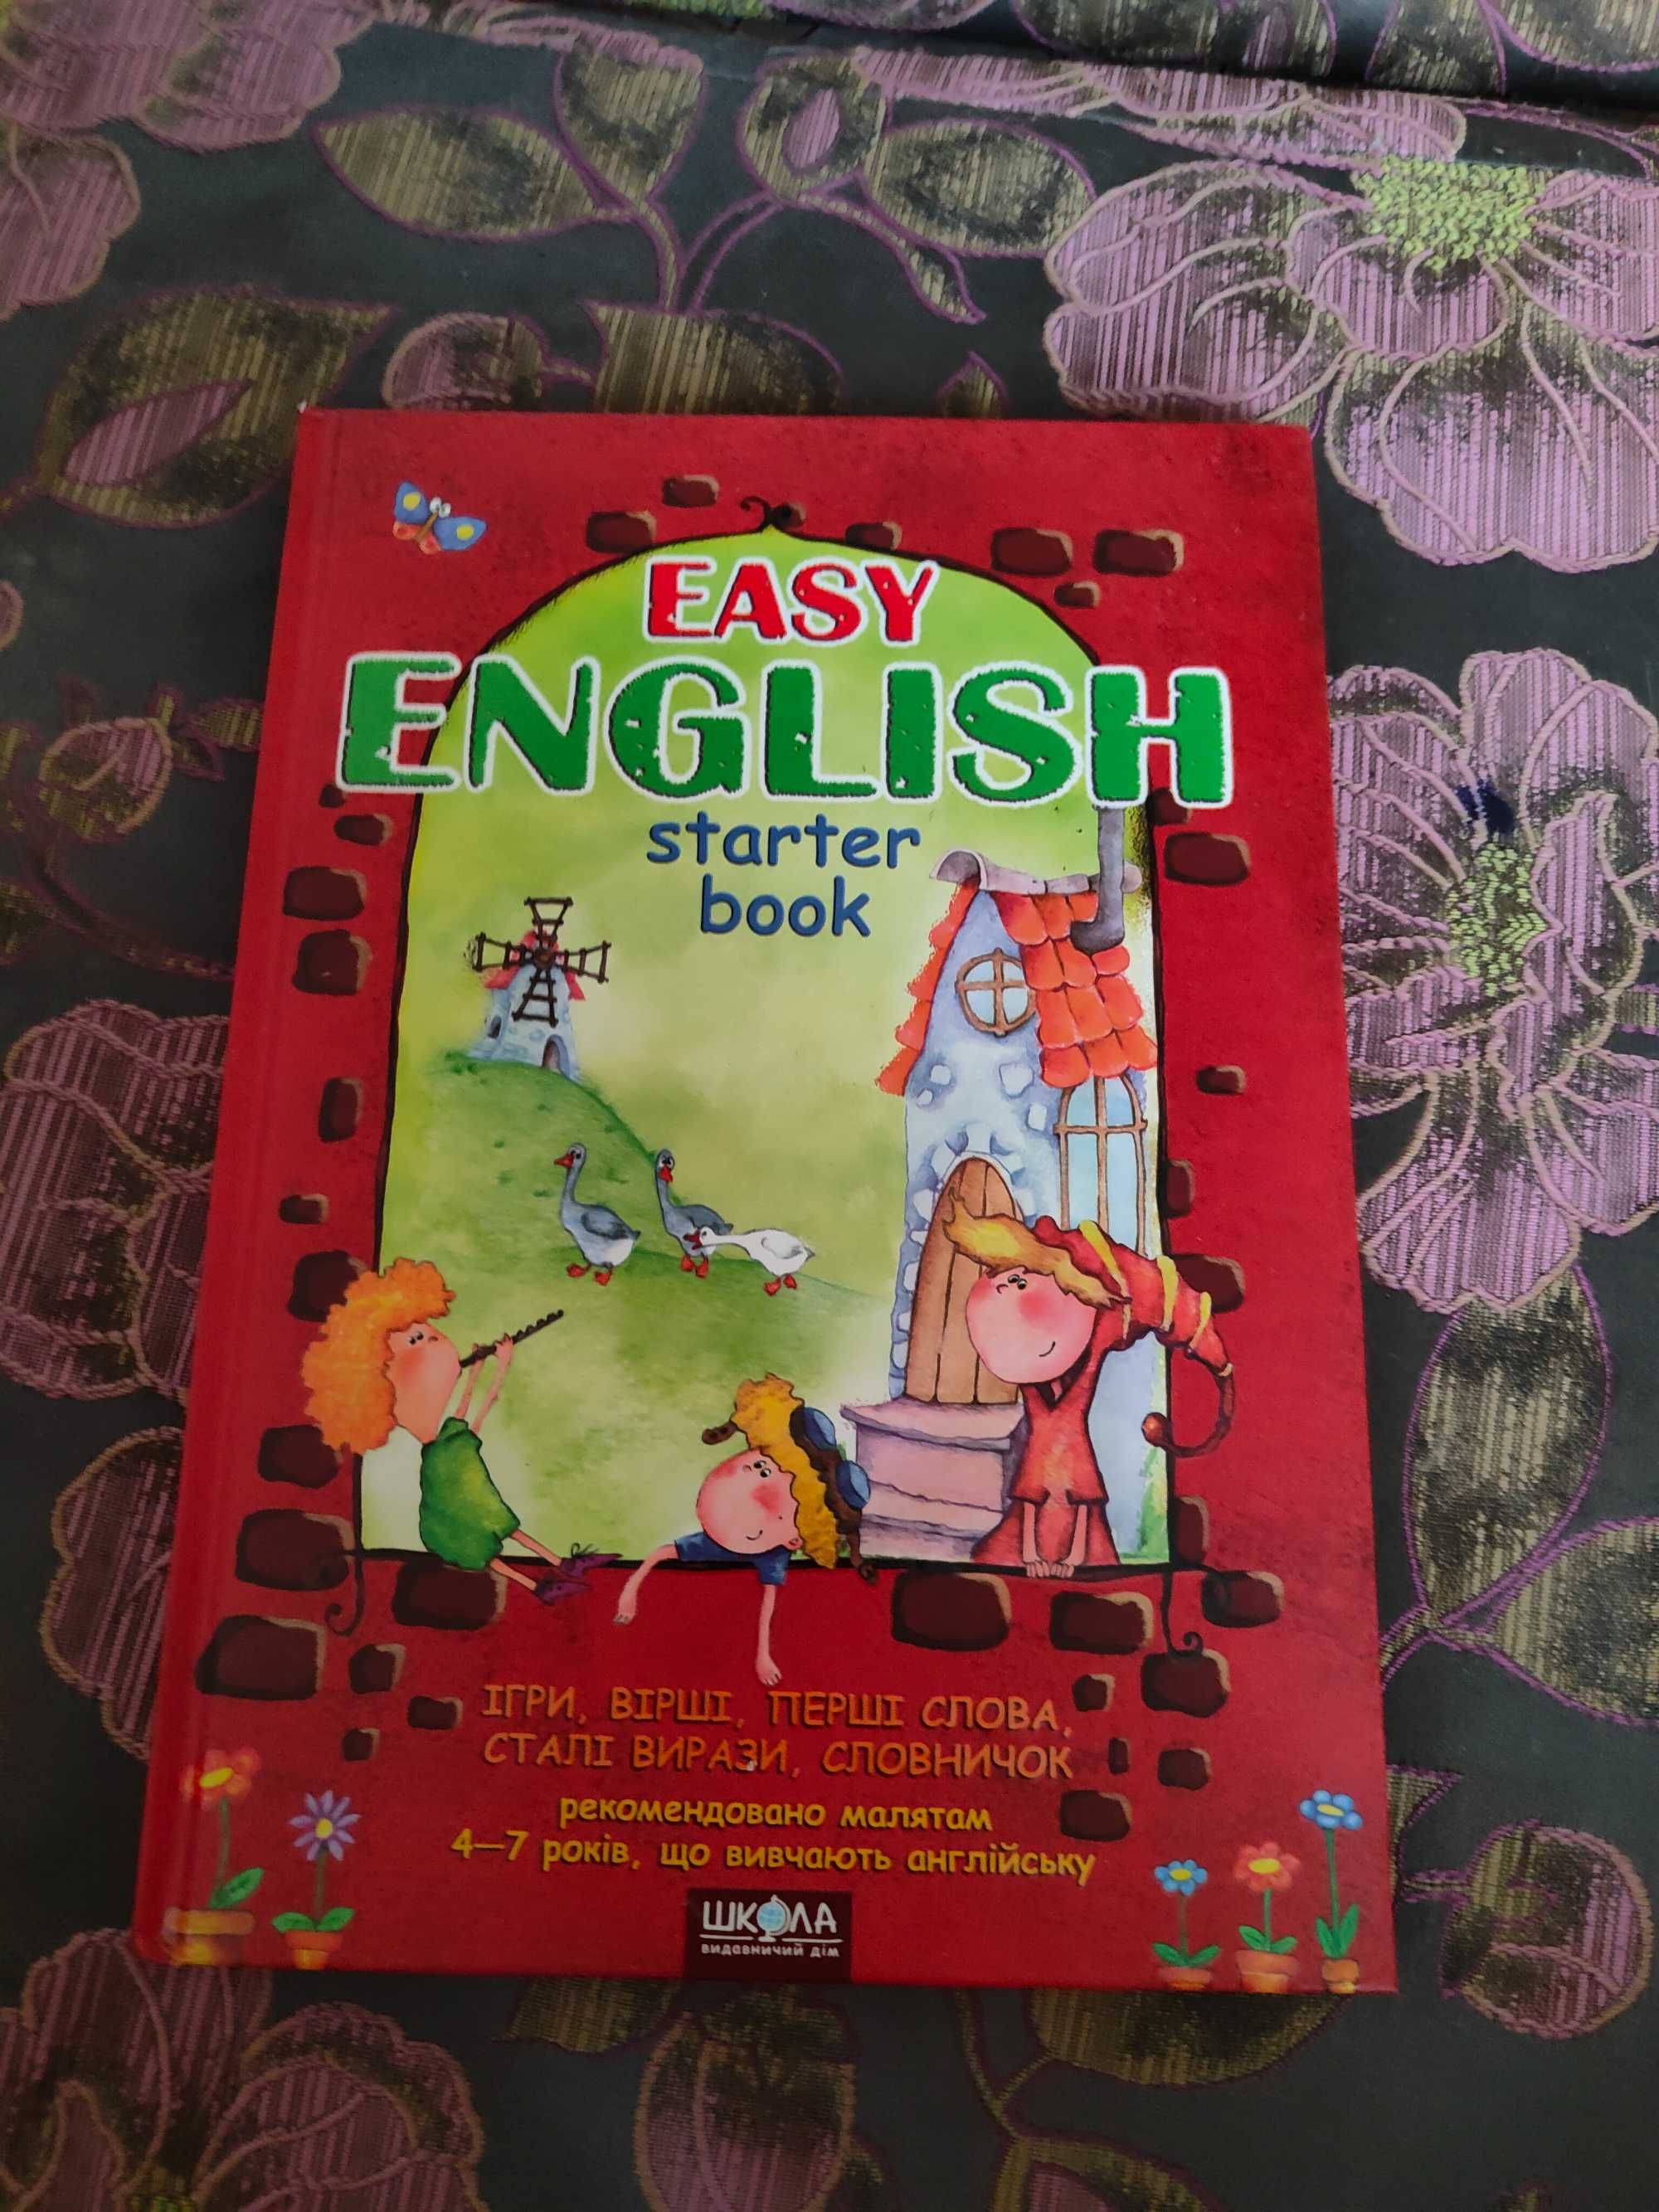 Easy English starter book